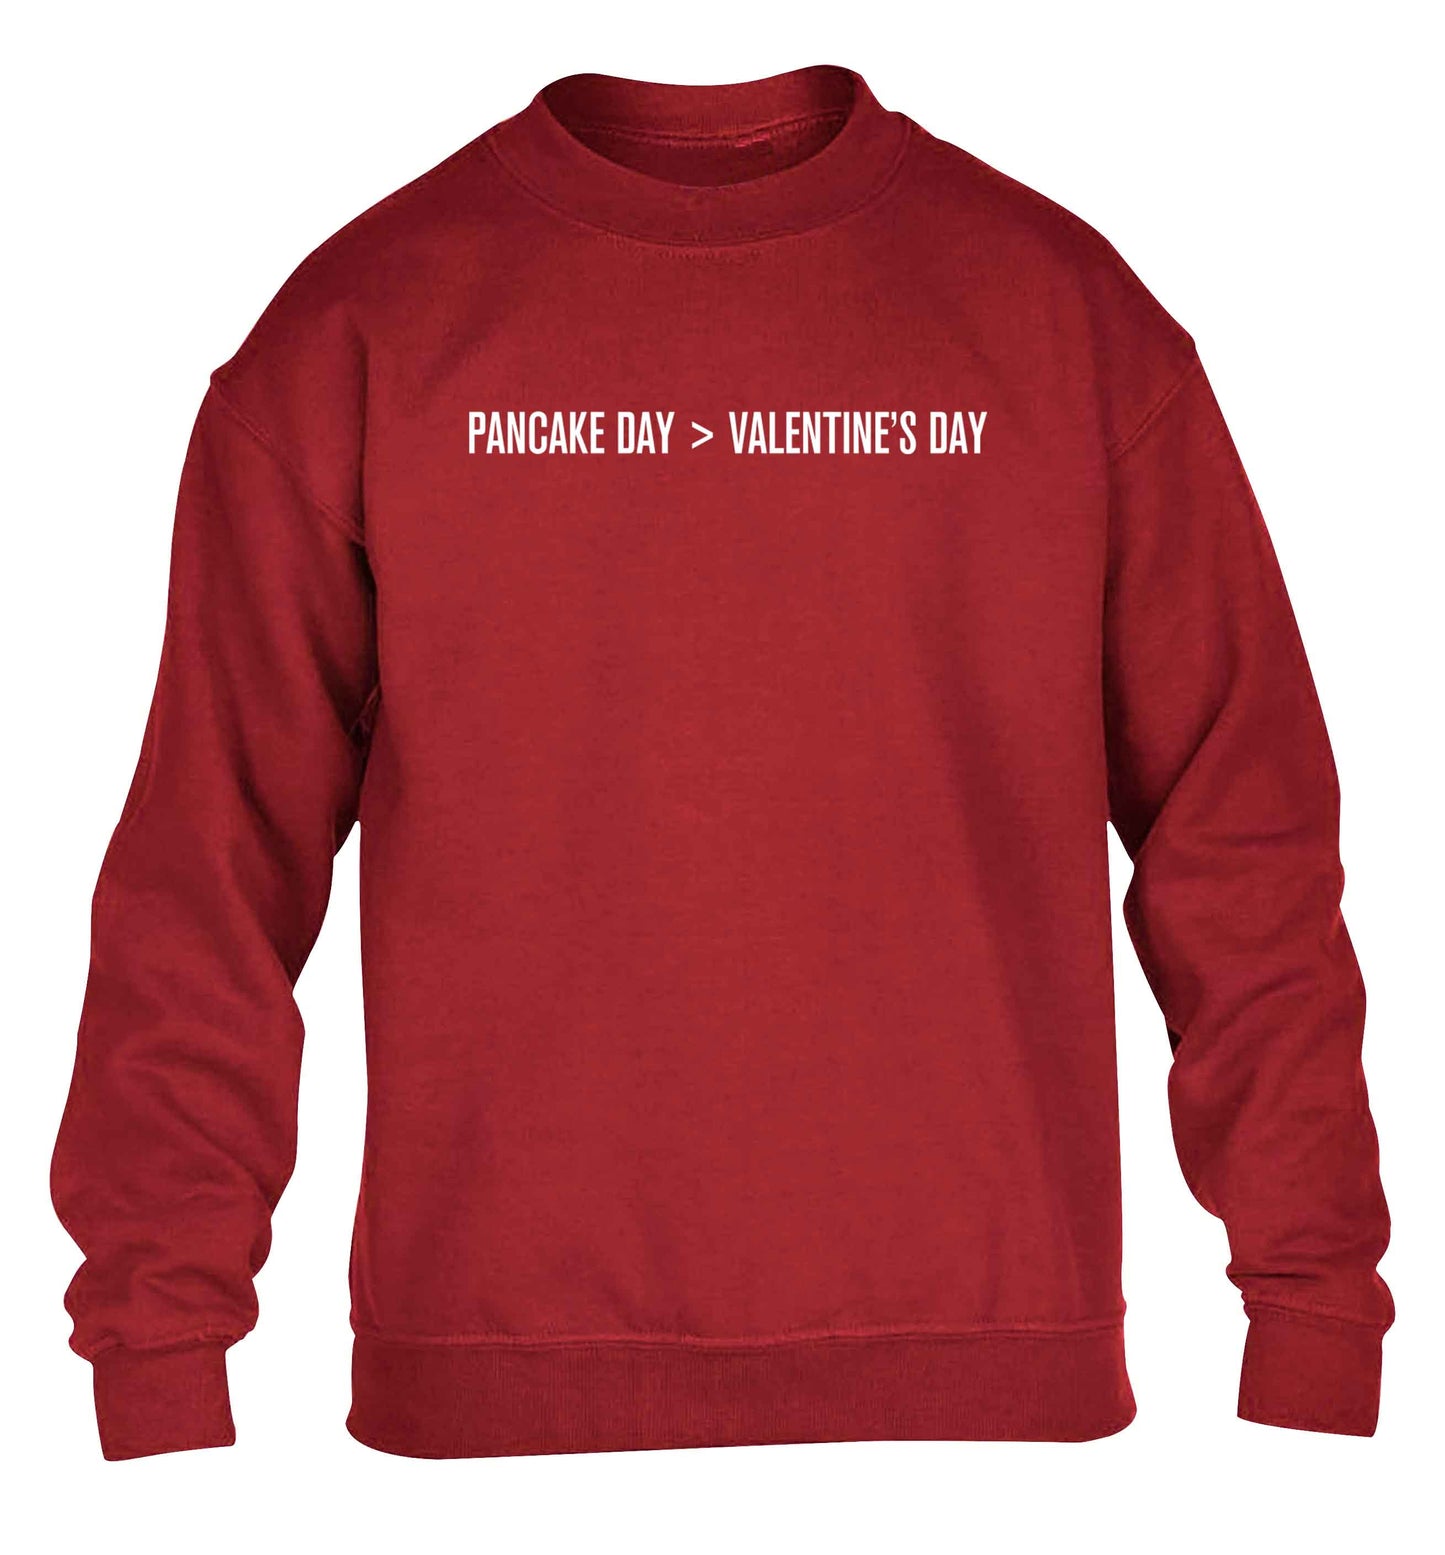 Pancake day > valentines day children's grey sweater 12-13 Years